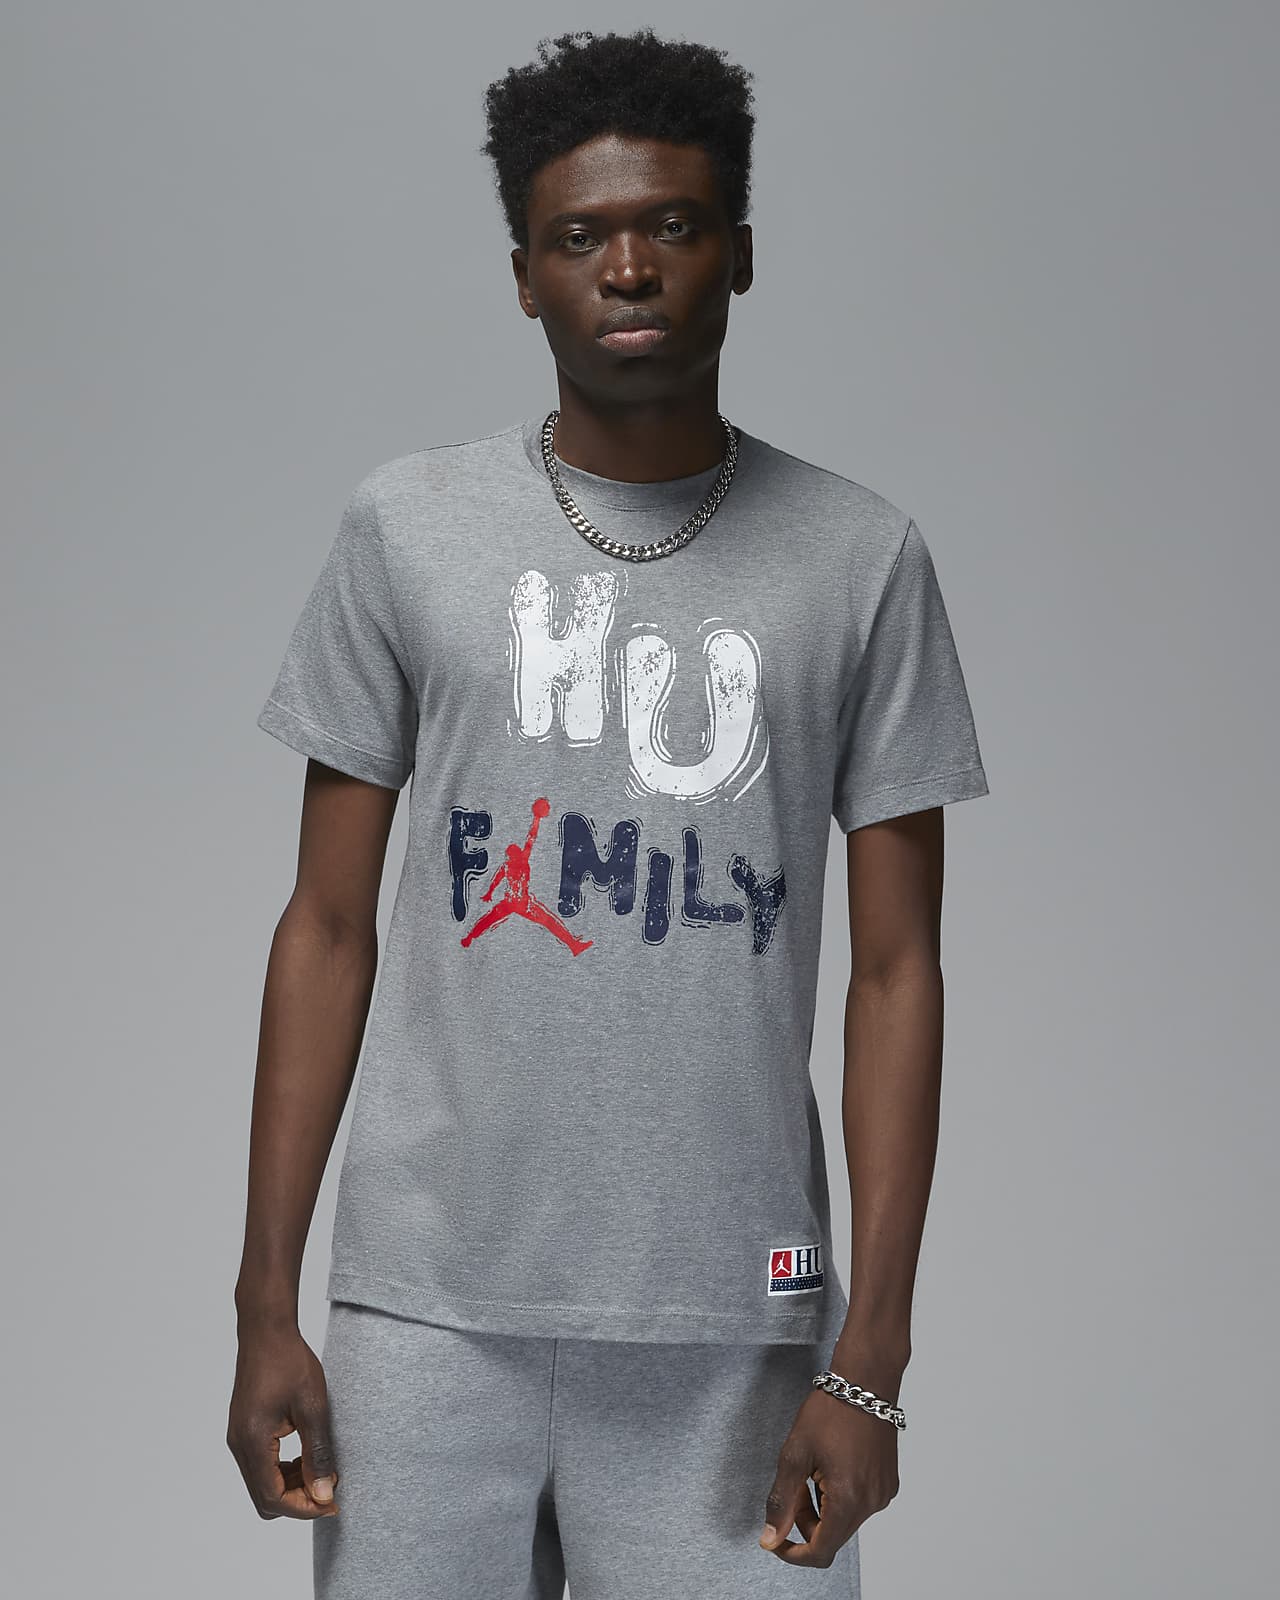 Kreet zuiverheid Ijsbeer Jordan x Howard University Men's T-Shirt. Nike.com